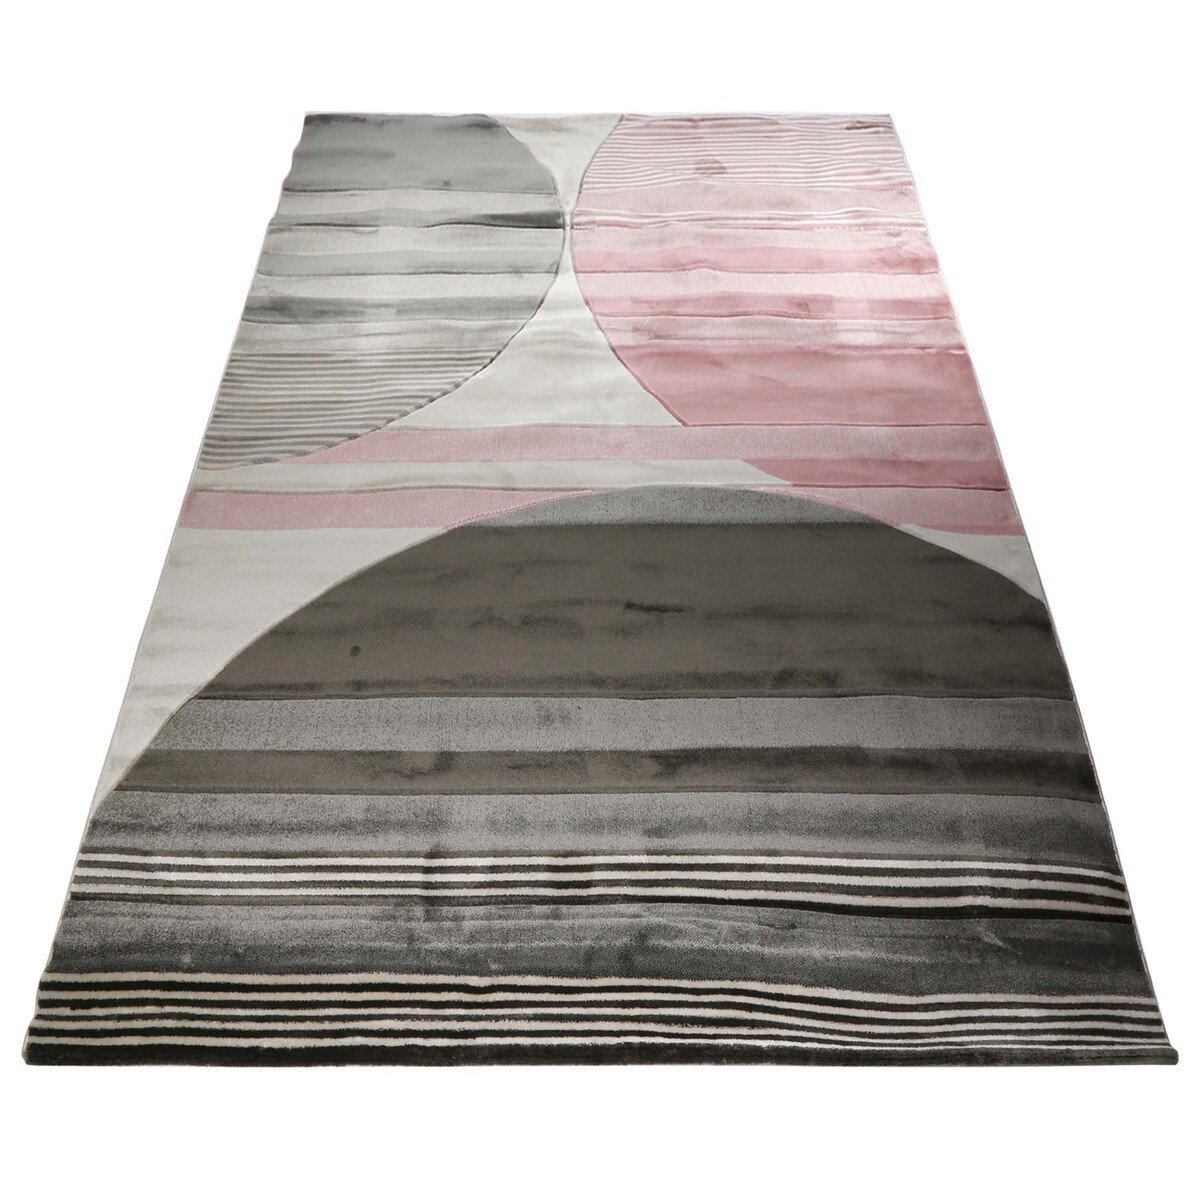 Homewell Polypropylene Turkey Carpet Vincenza02 200x300cm Assorted